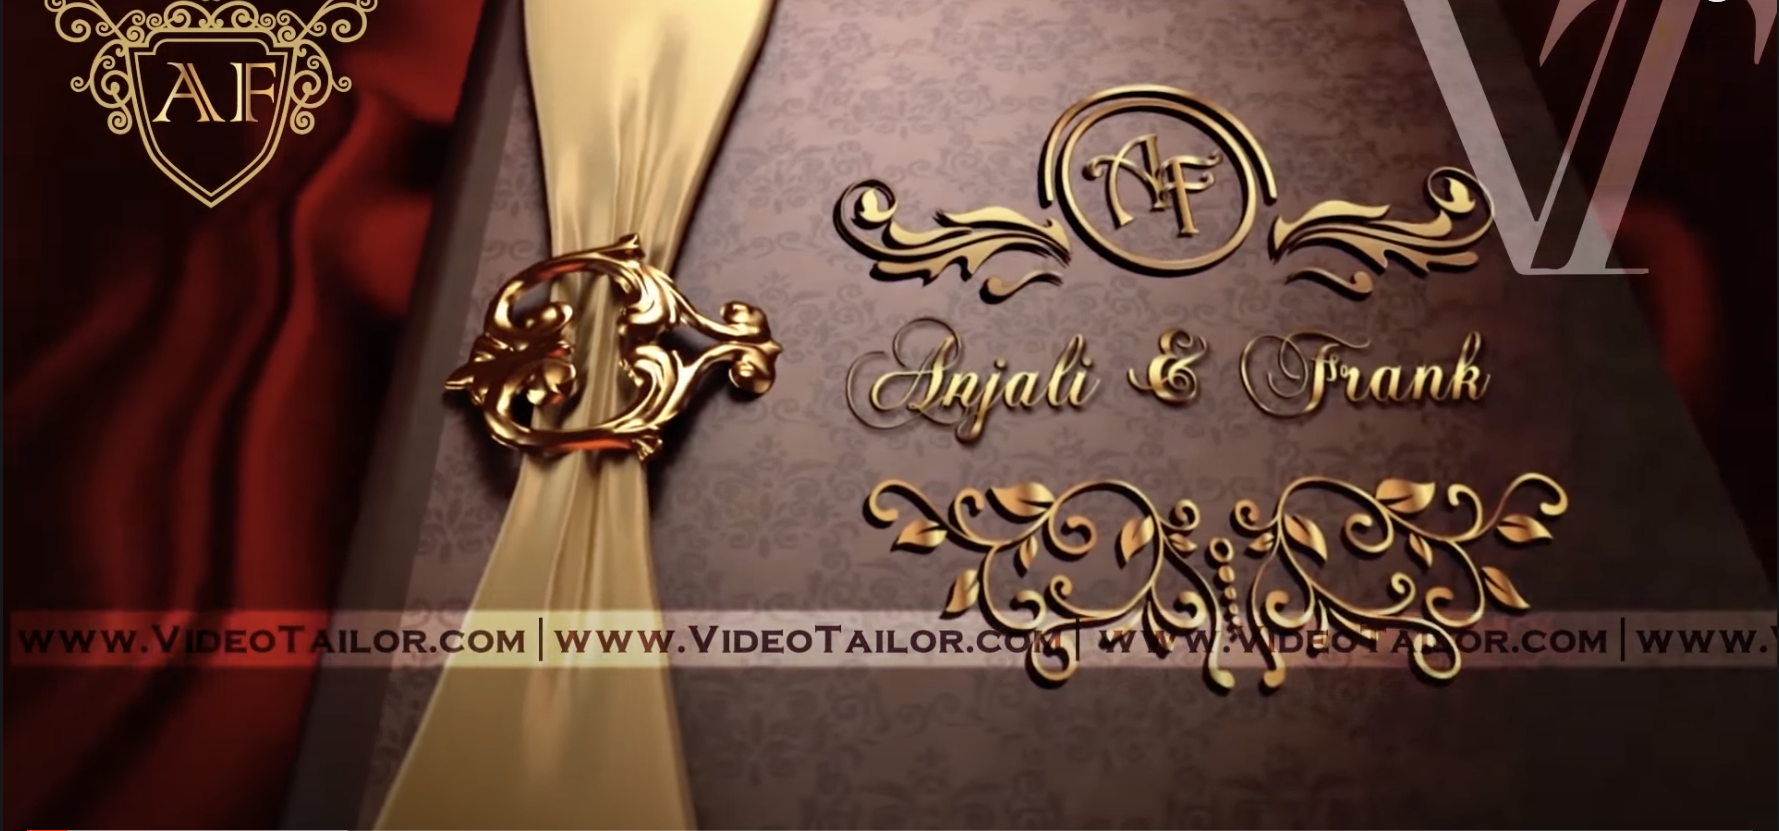 Sikh Wedding Invitation Video - VideoTailor